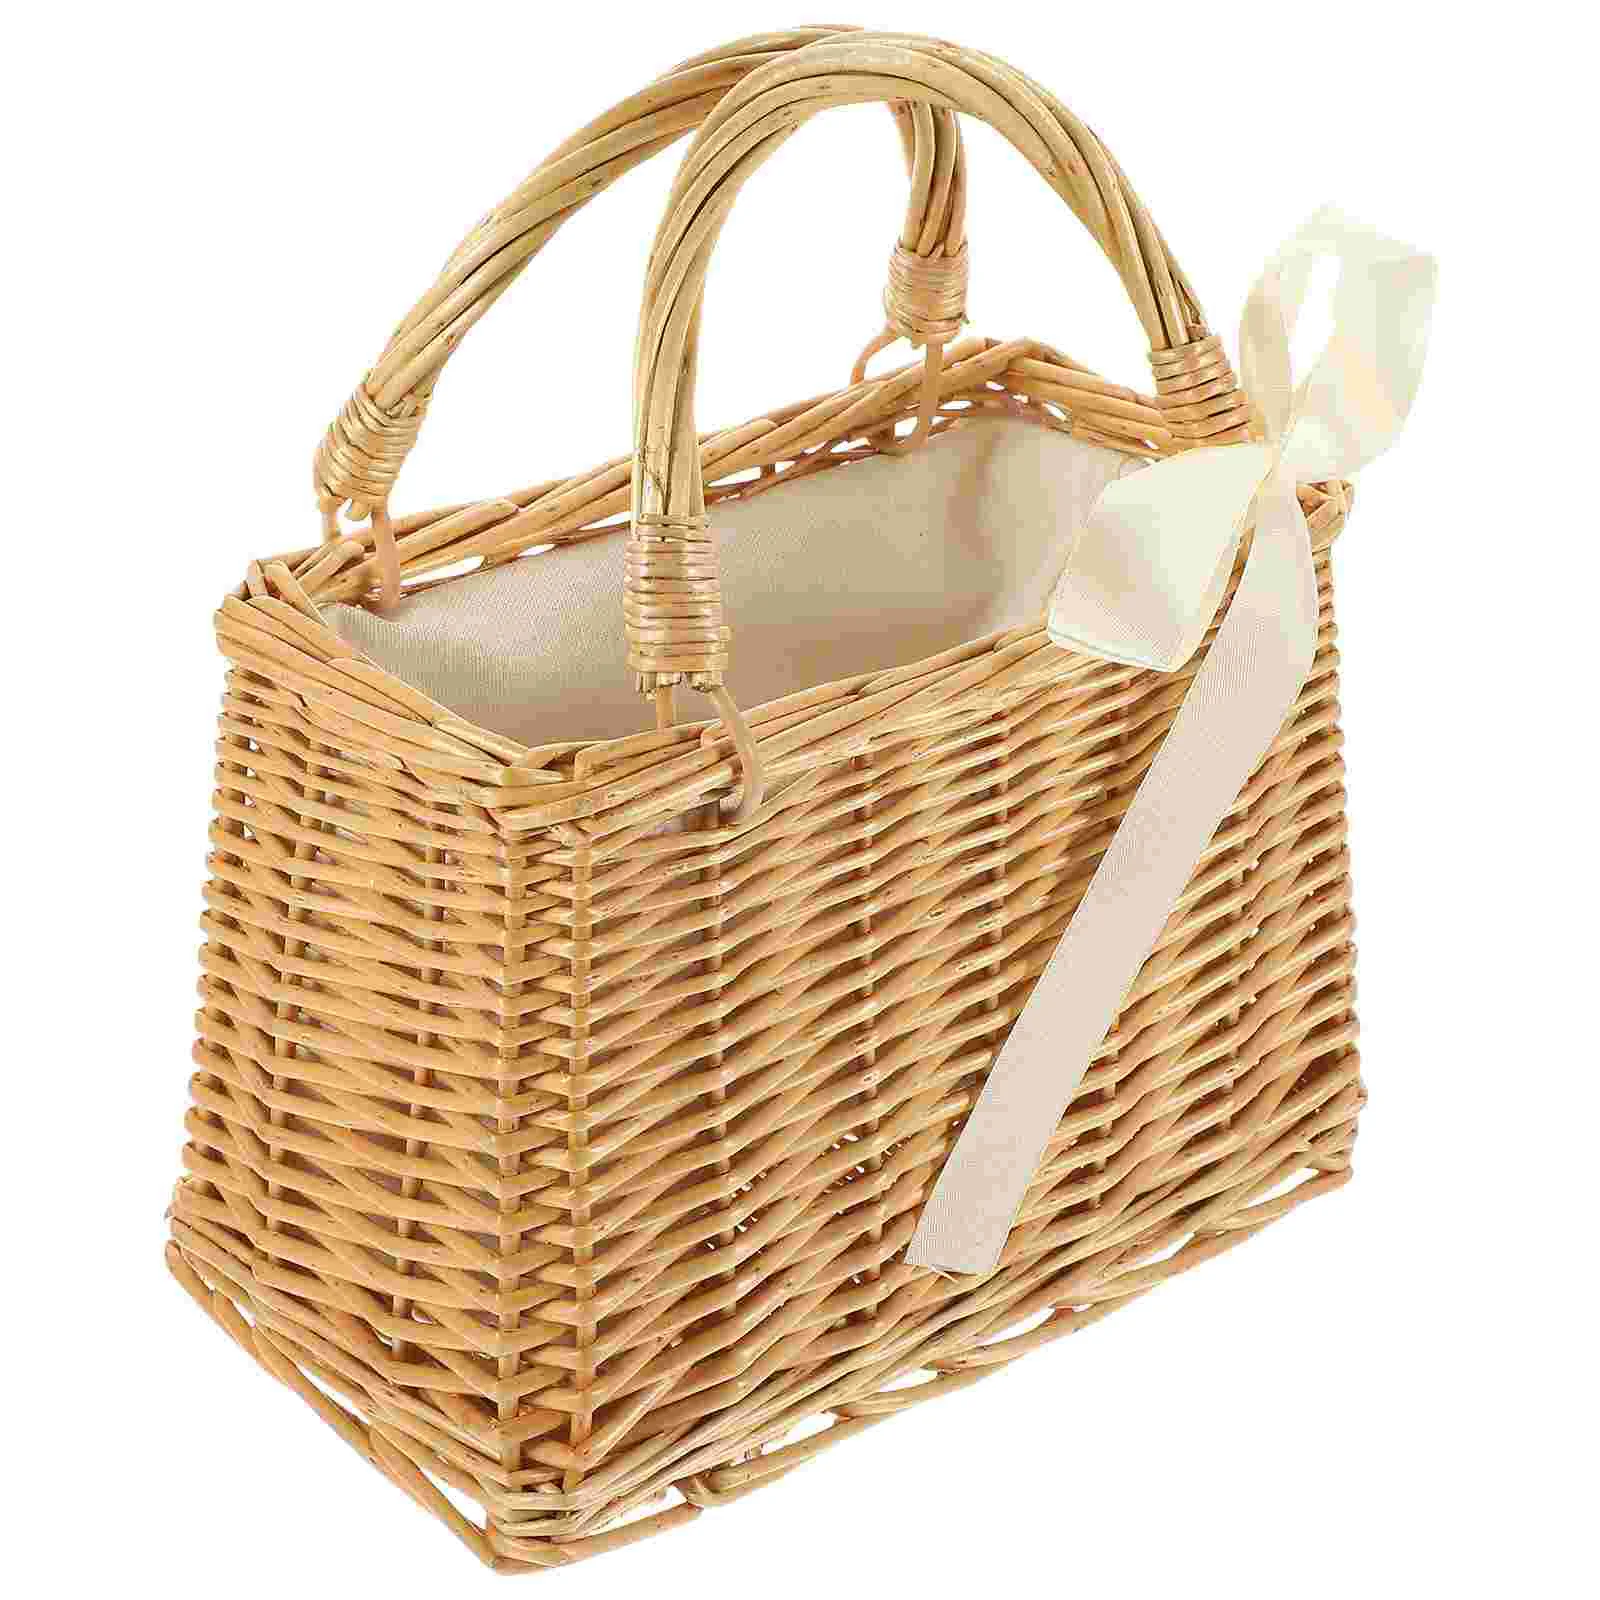 

Basket Woven Rattan Flower Straw Wicker Baskets Tote Beach Storage Picnic Willow Hand Wedding Handbag Handbags Girl Purses